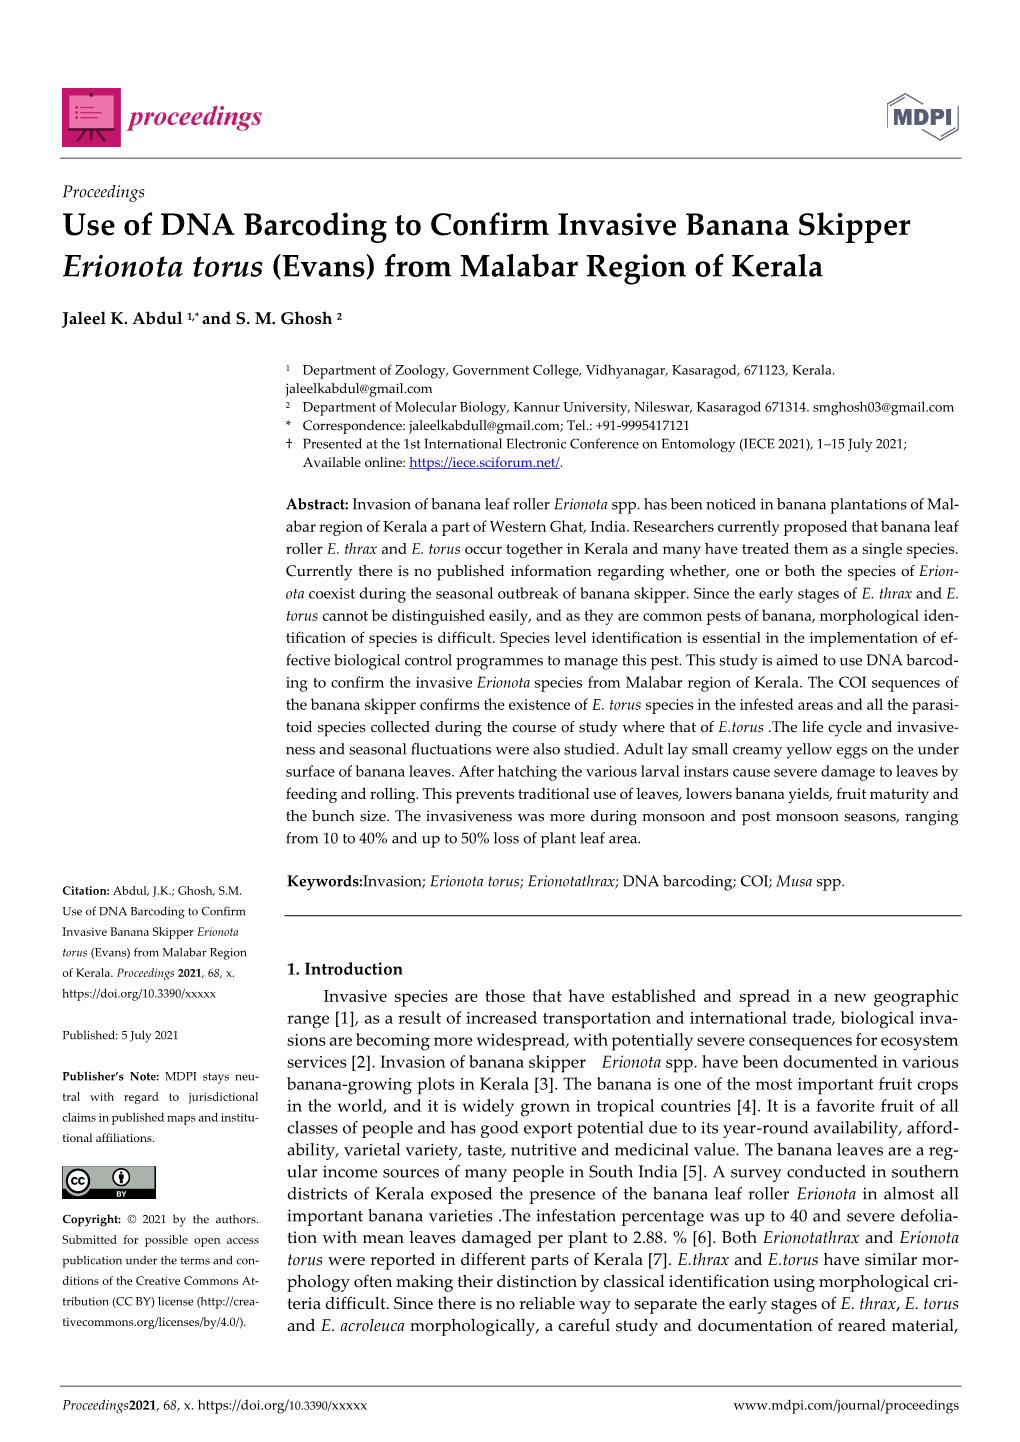 Use of DNA Barcoding to Confirm Invasive Banana Skipper Erionota Torus (Evans) from Malabar Region of Kerala